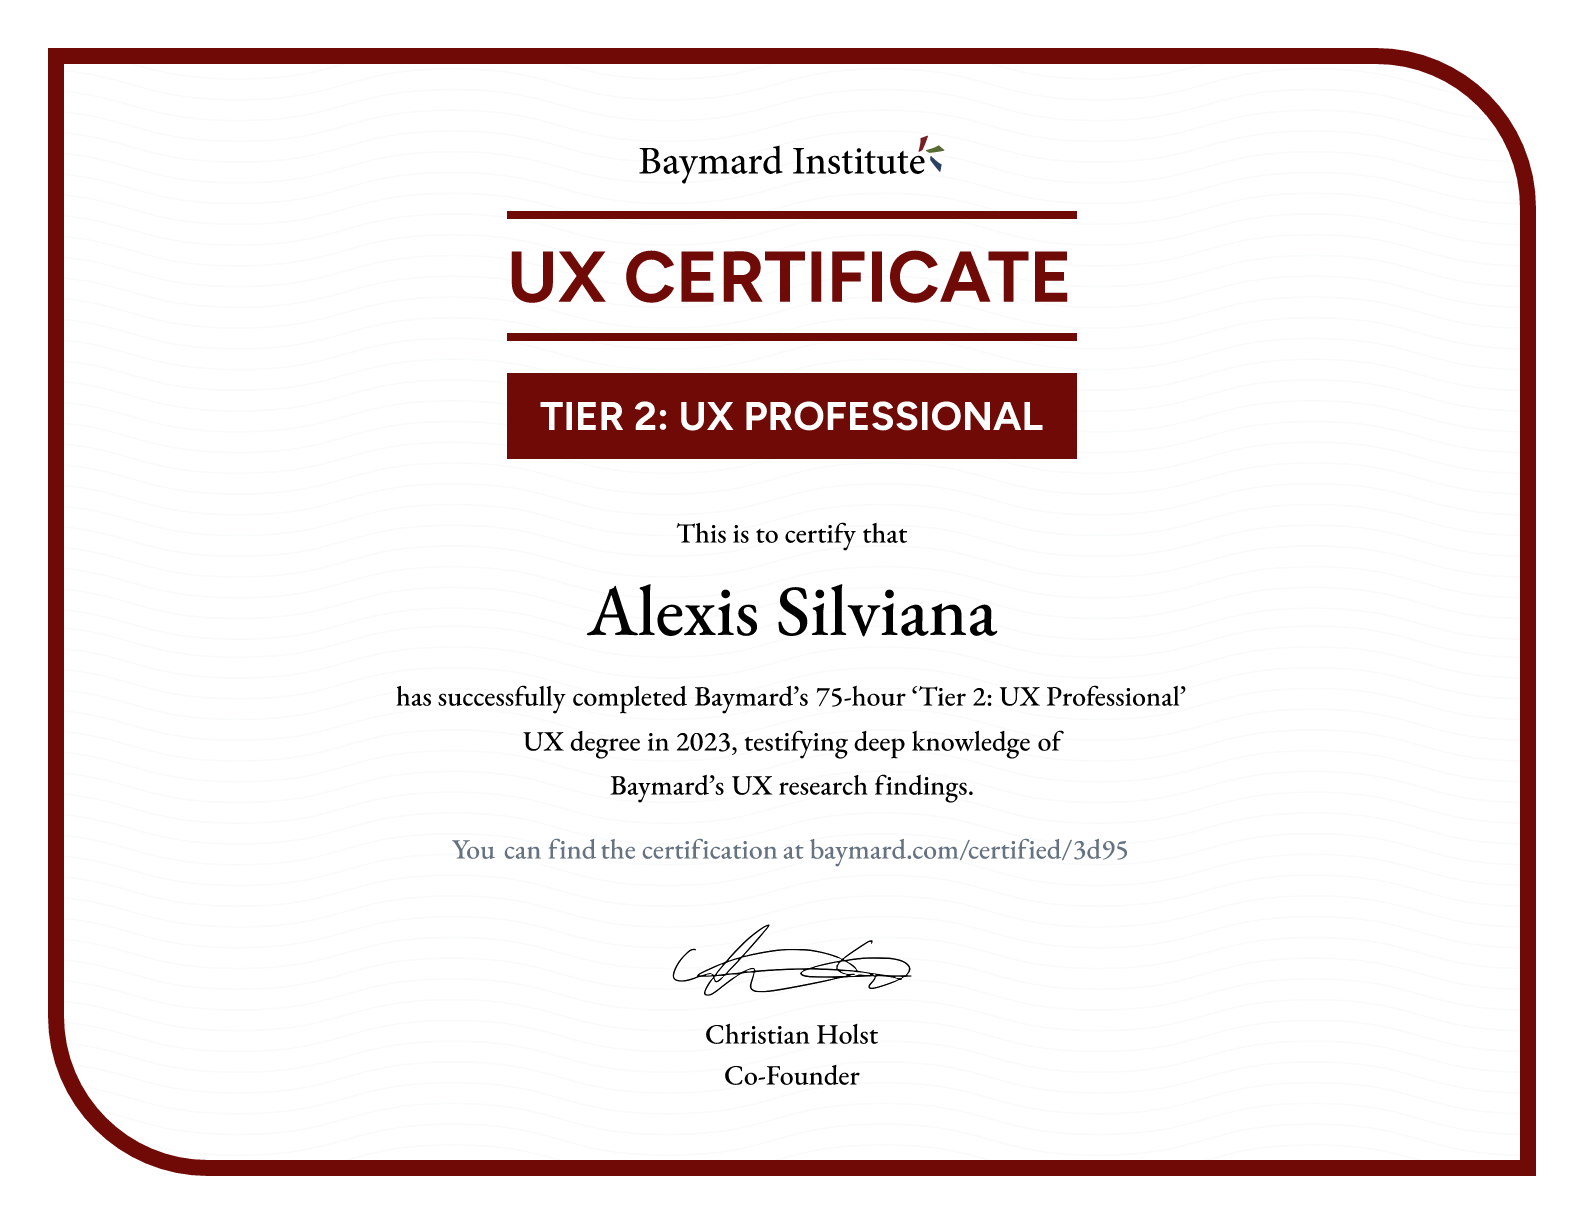 Alexis Silviana’s certificate